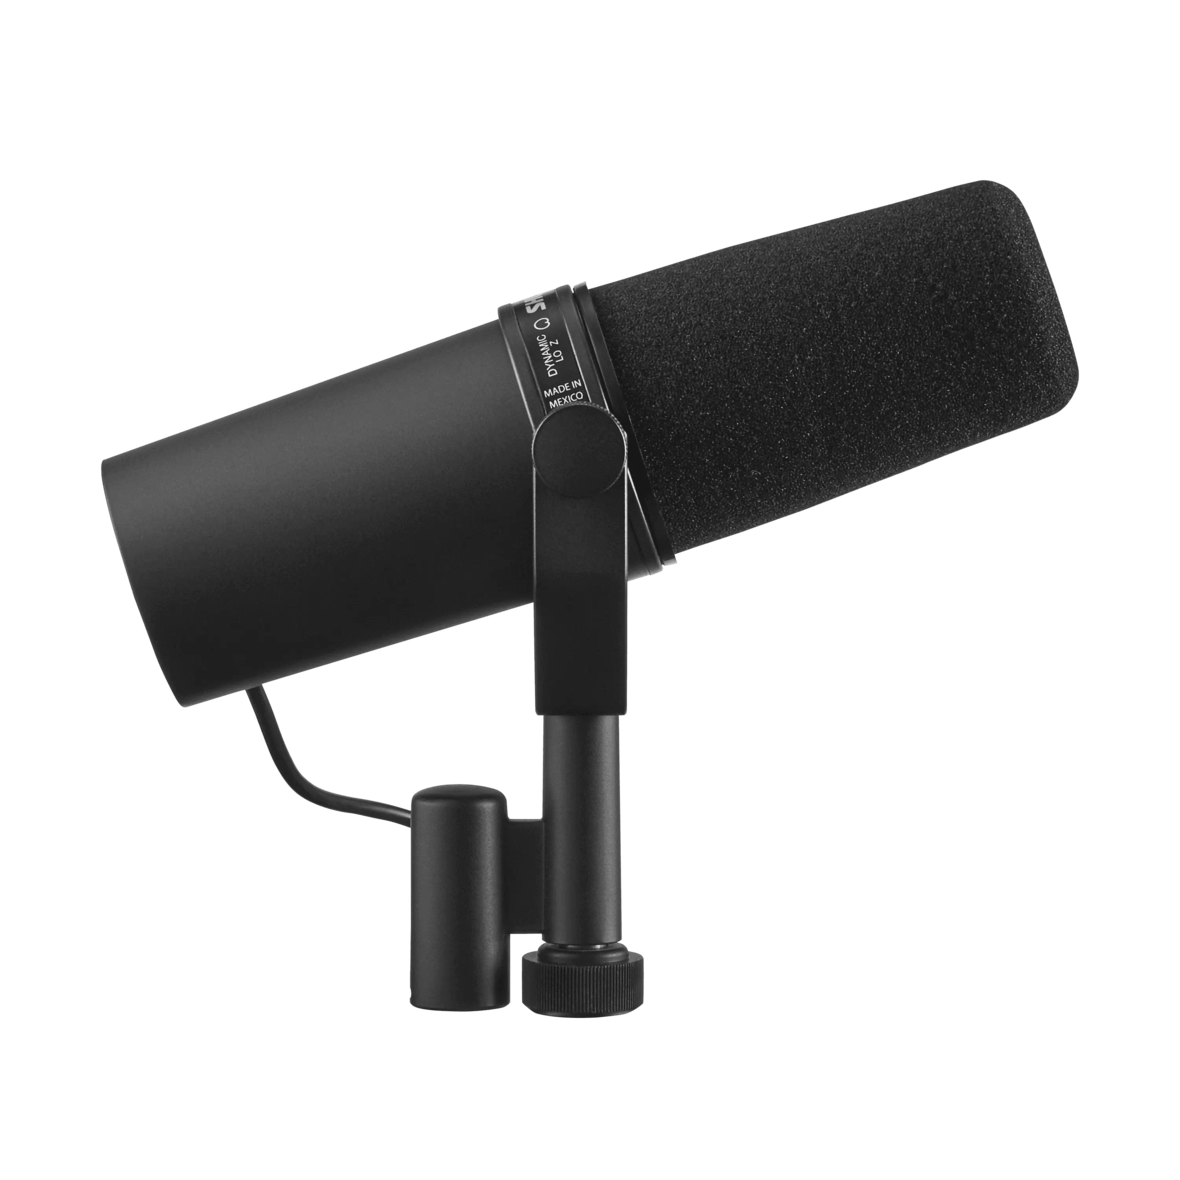 SM7B - Vocal Microphone - Shure USA